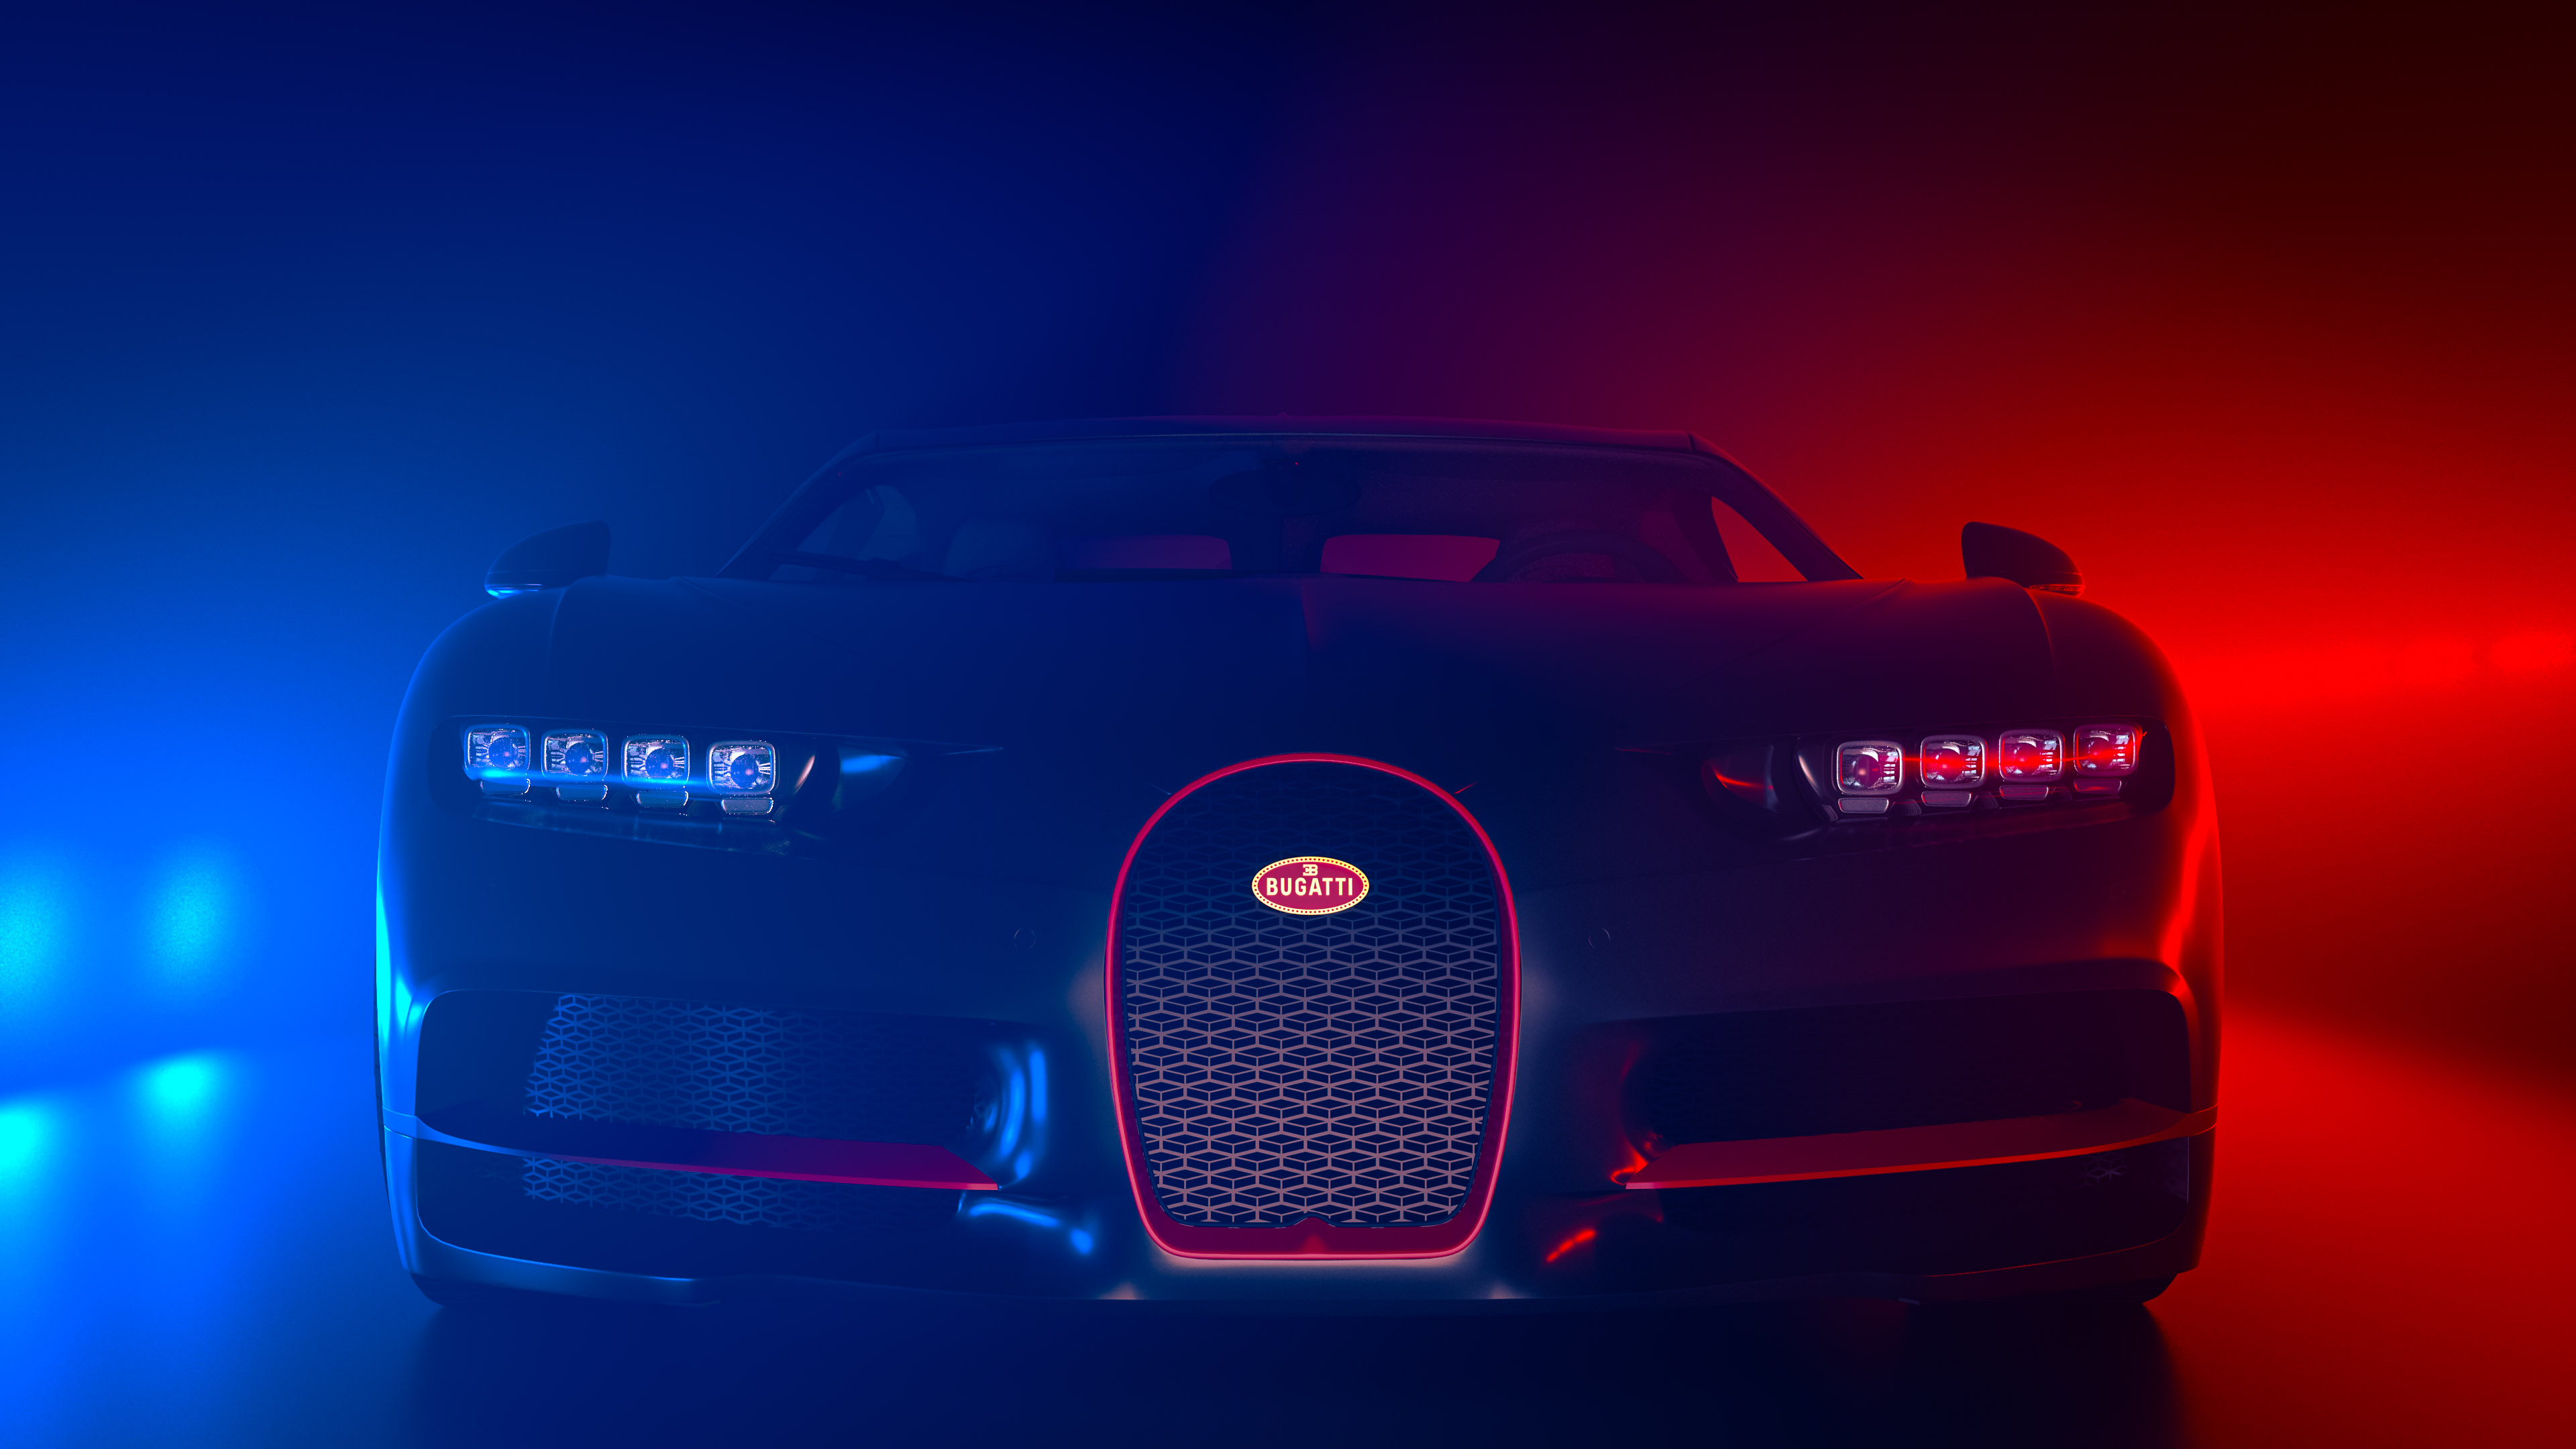 desktop wallpaper of Bugatti Chiron super car in 4K Ultra HD resolution